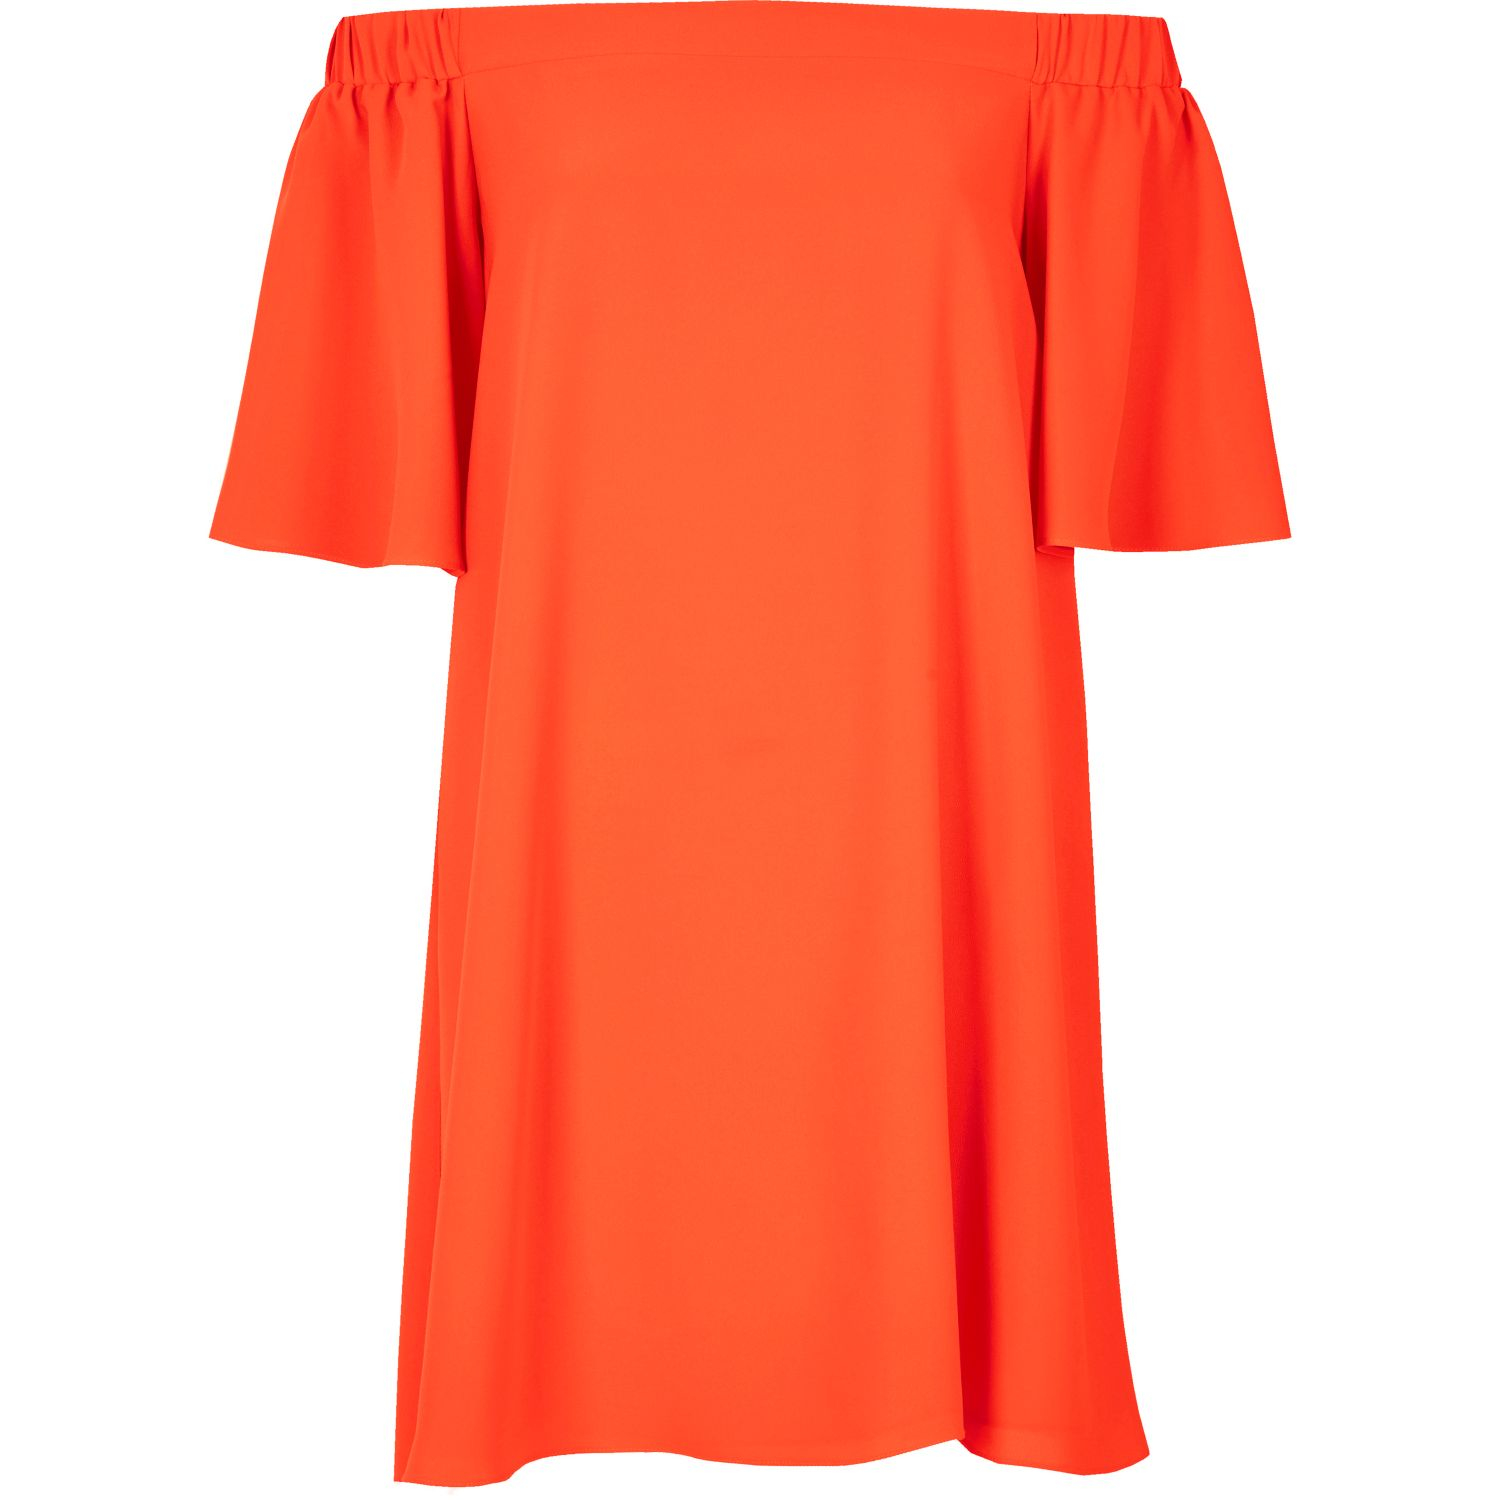 River Island Dress Orange & Better Choice 2017